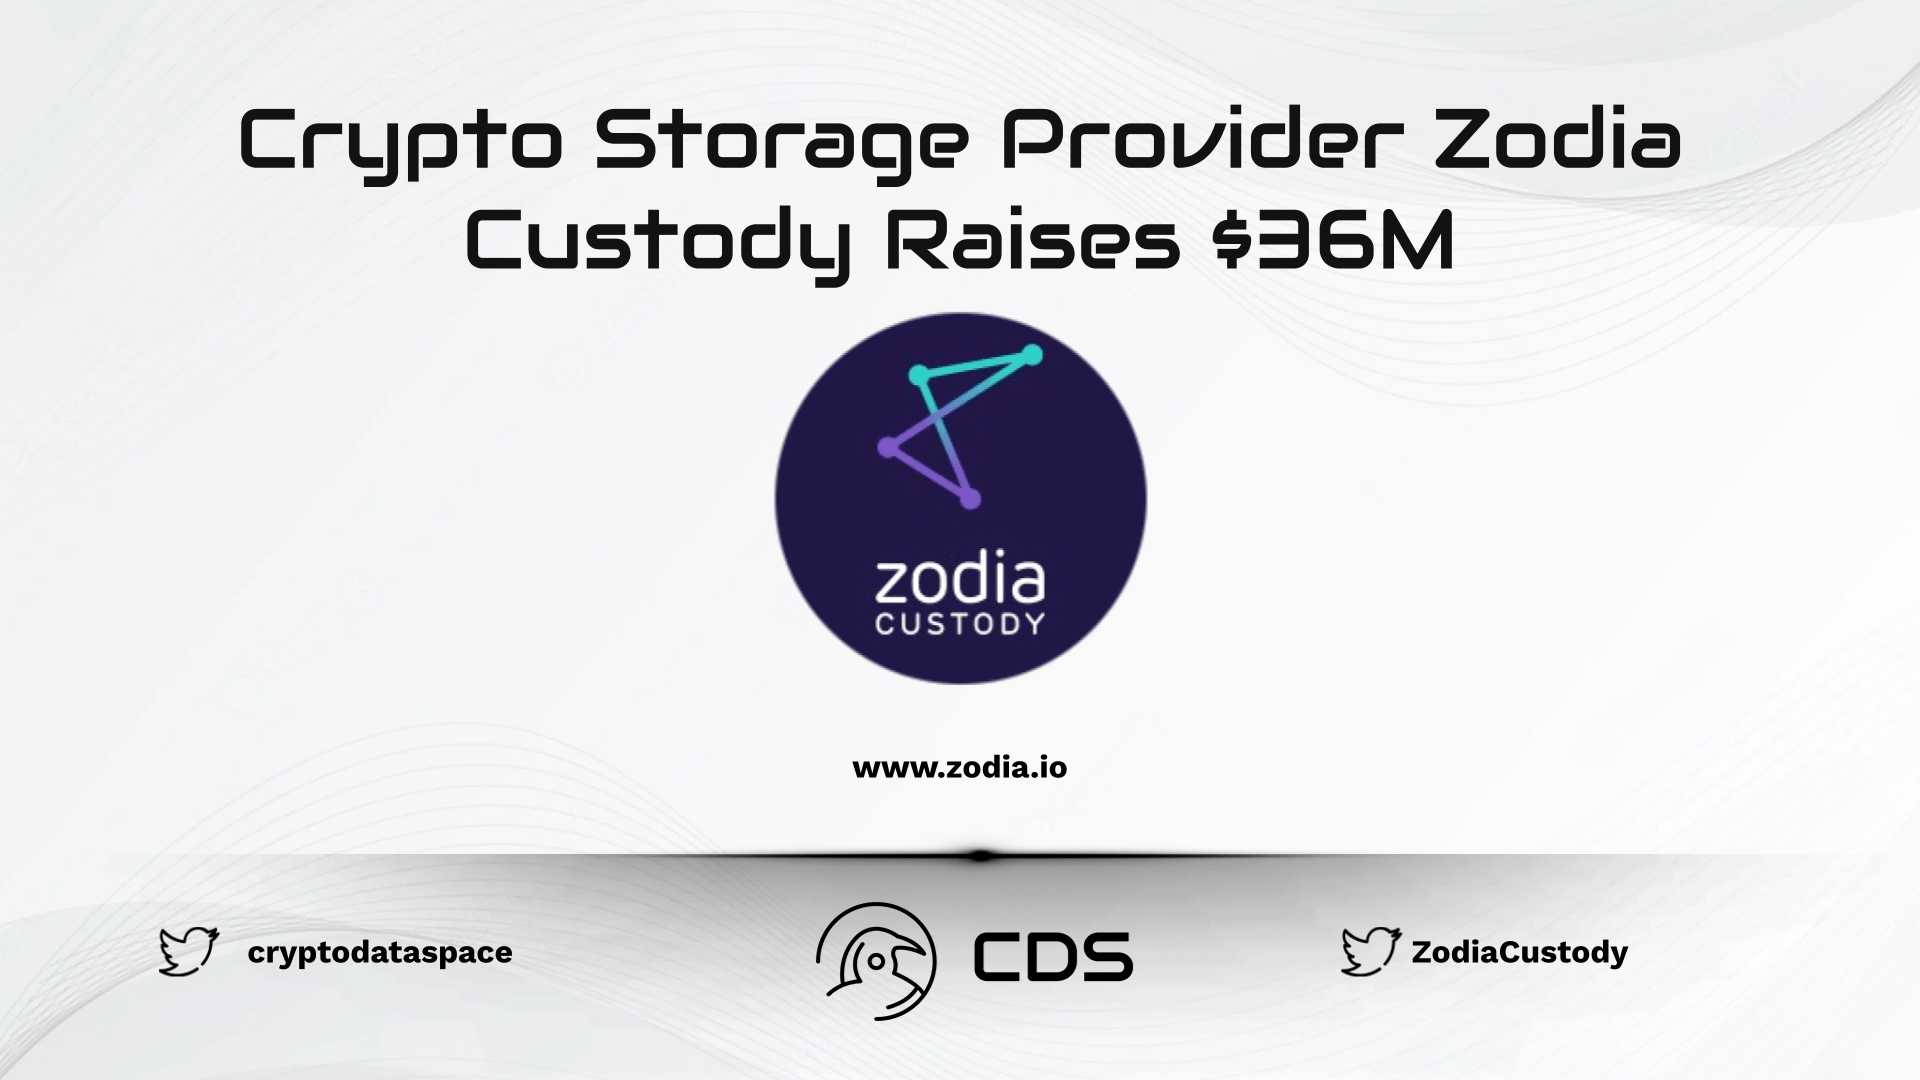 Crypto Storage Provider Zodia Custody Raises $36M